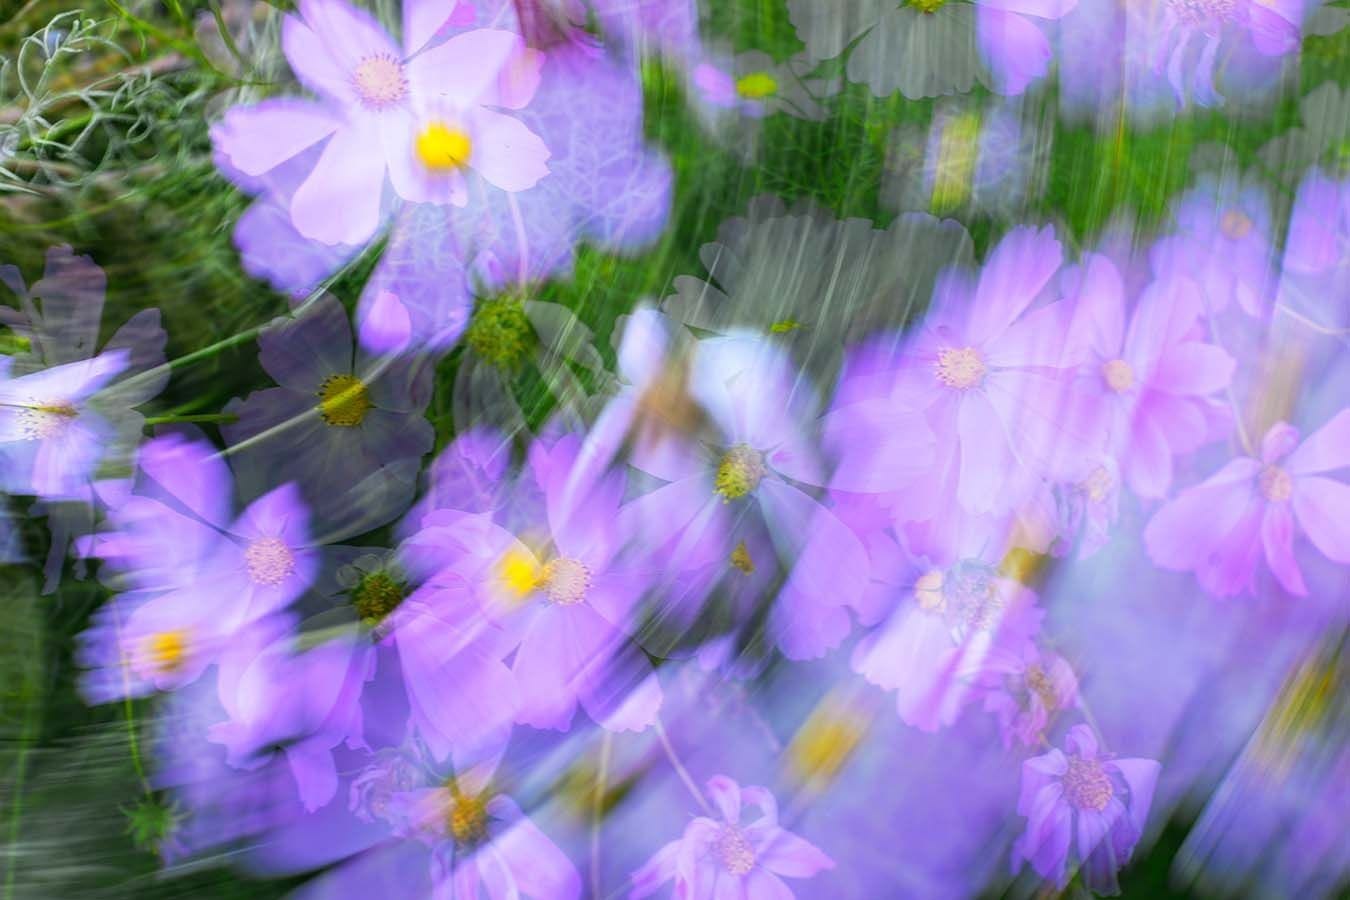 Impression swirl of purple flowers